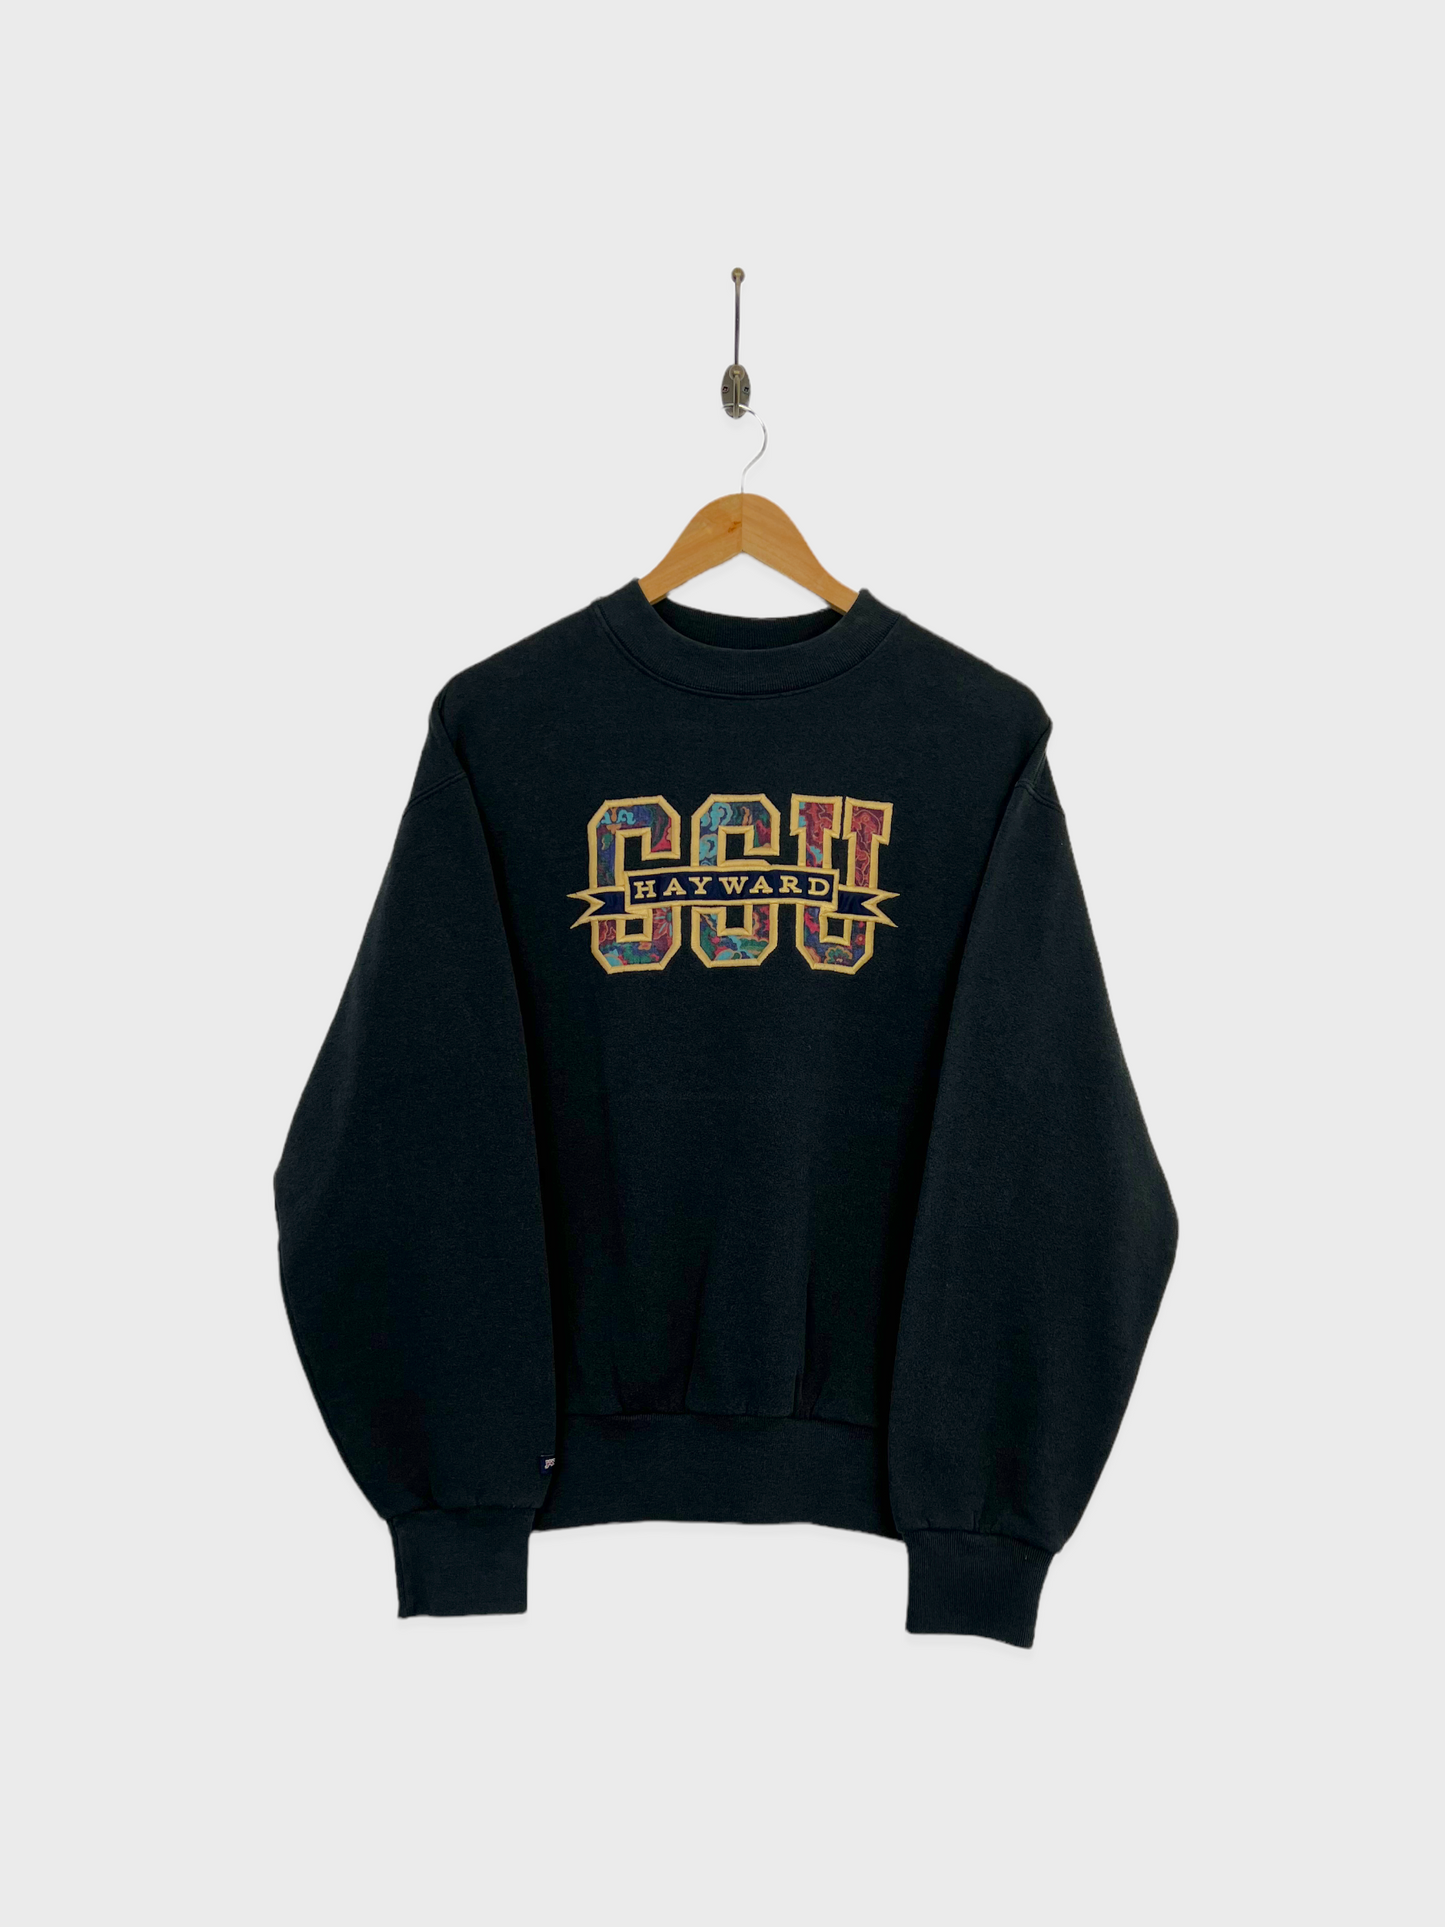 90's GGU Hayward USA Made Embroidered Vintage Sweatshirt Size 6